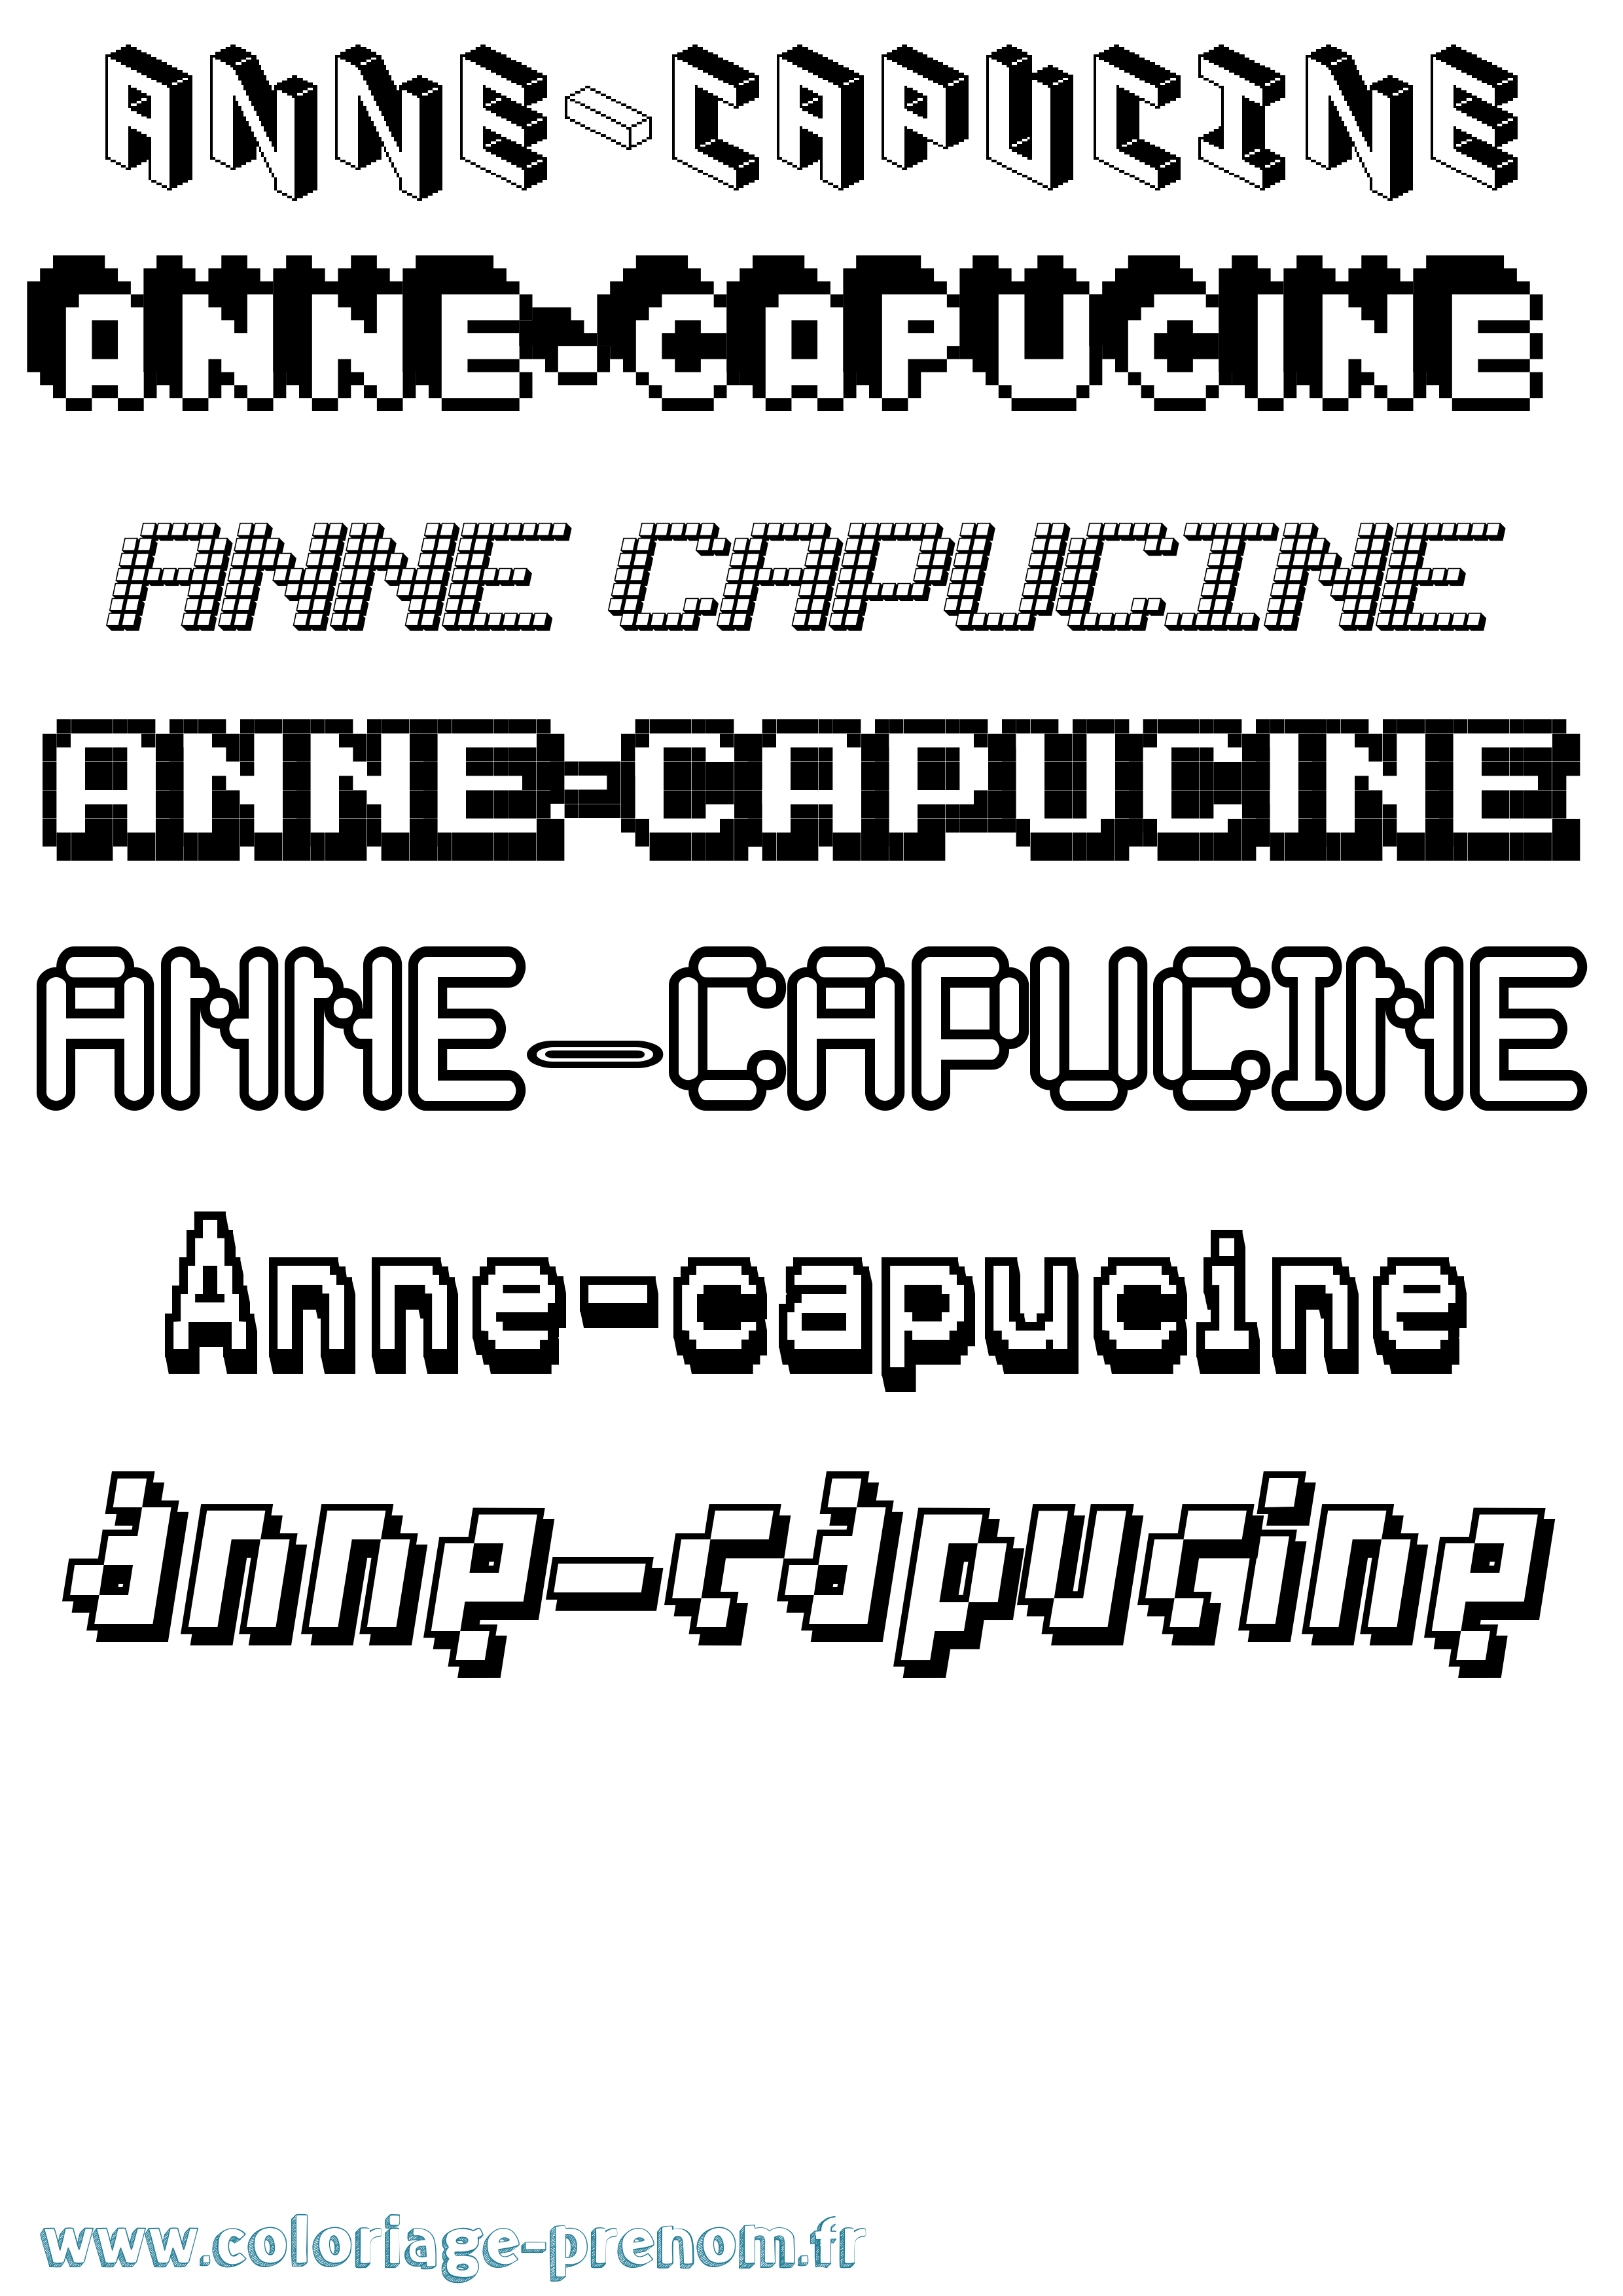 Coloriage prénom Anne-Capucine Pixel